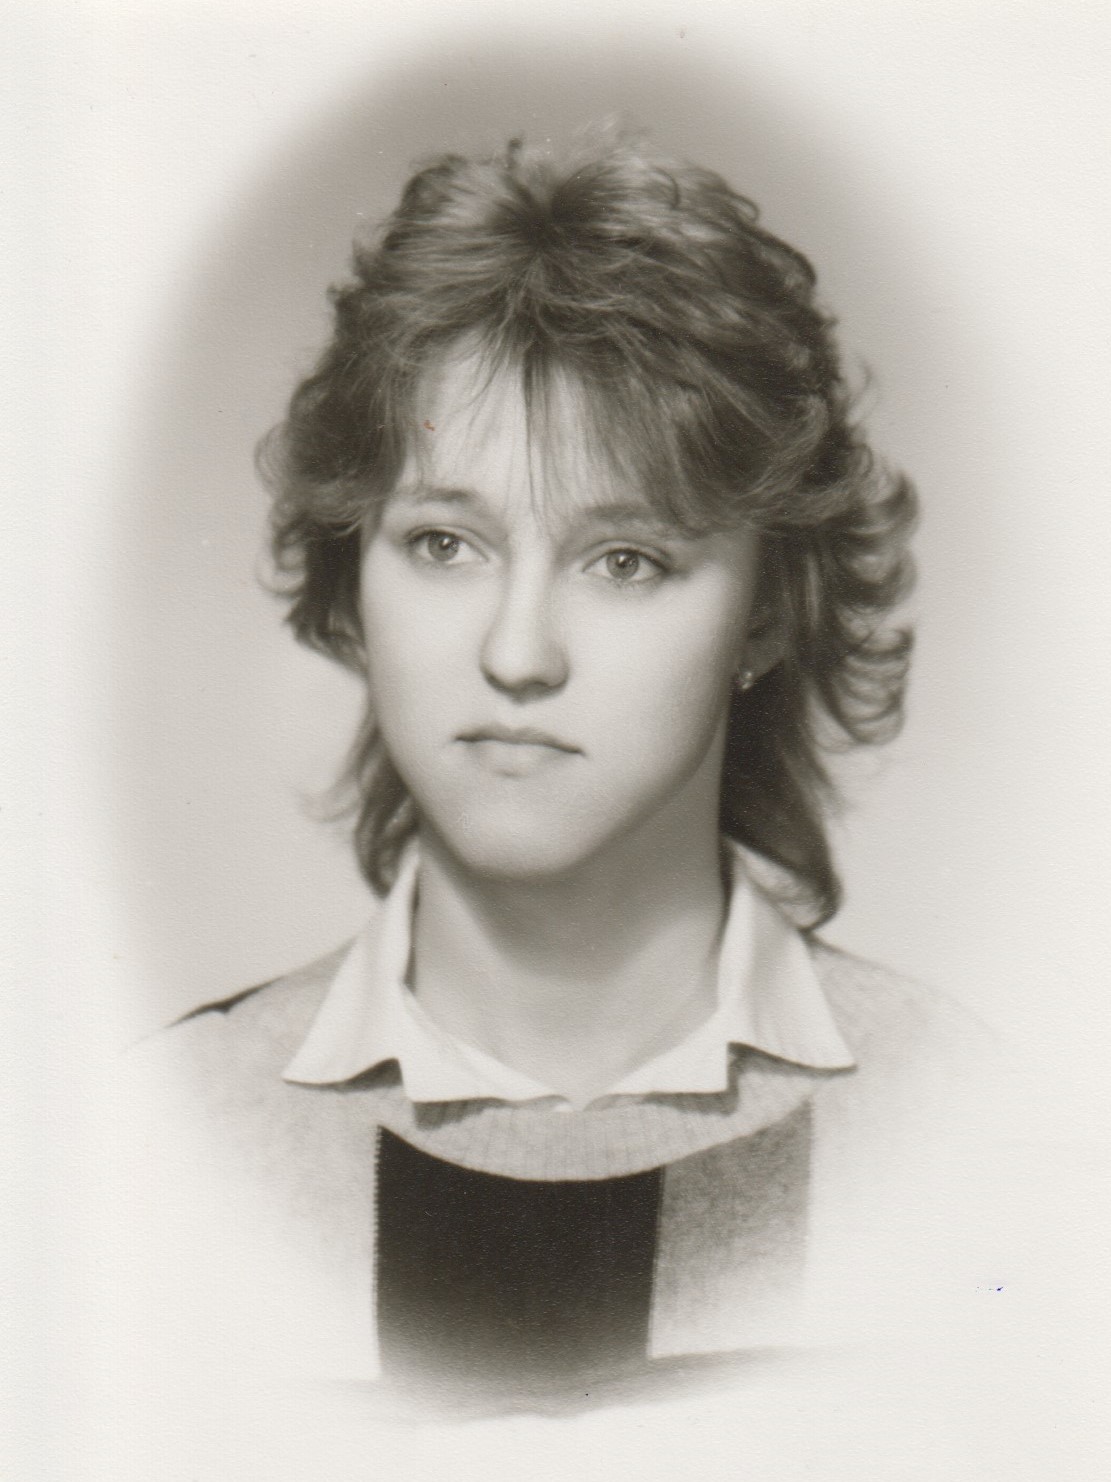 Secondary school graduation photo, 1988